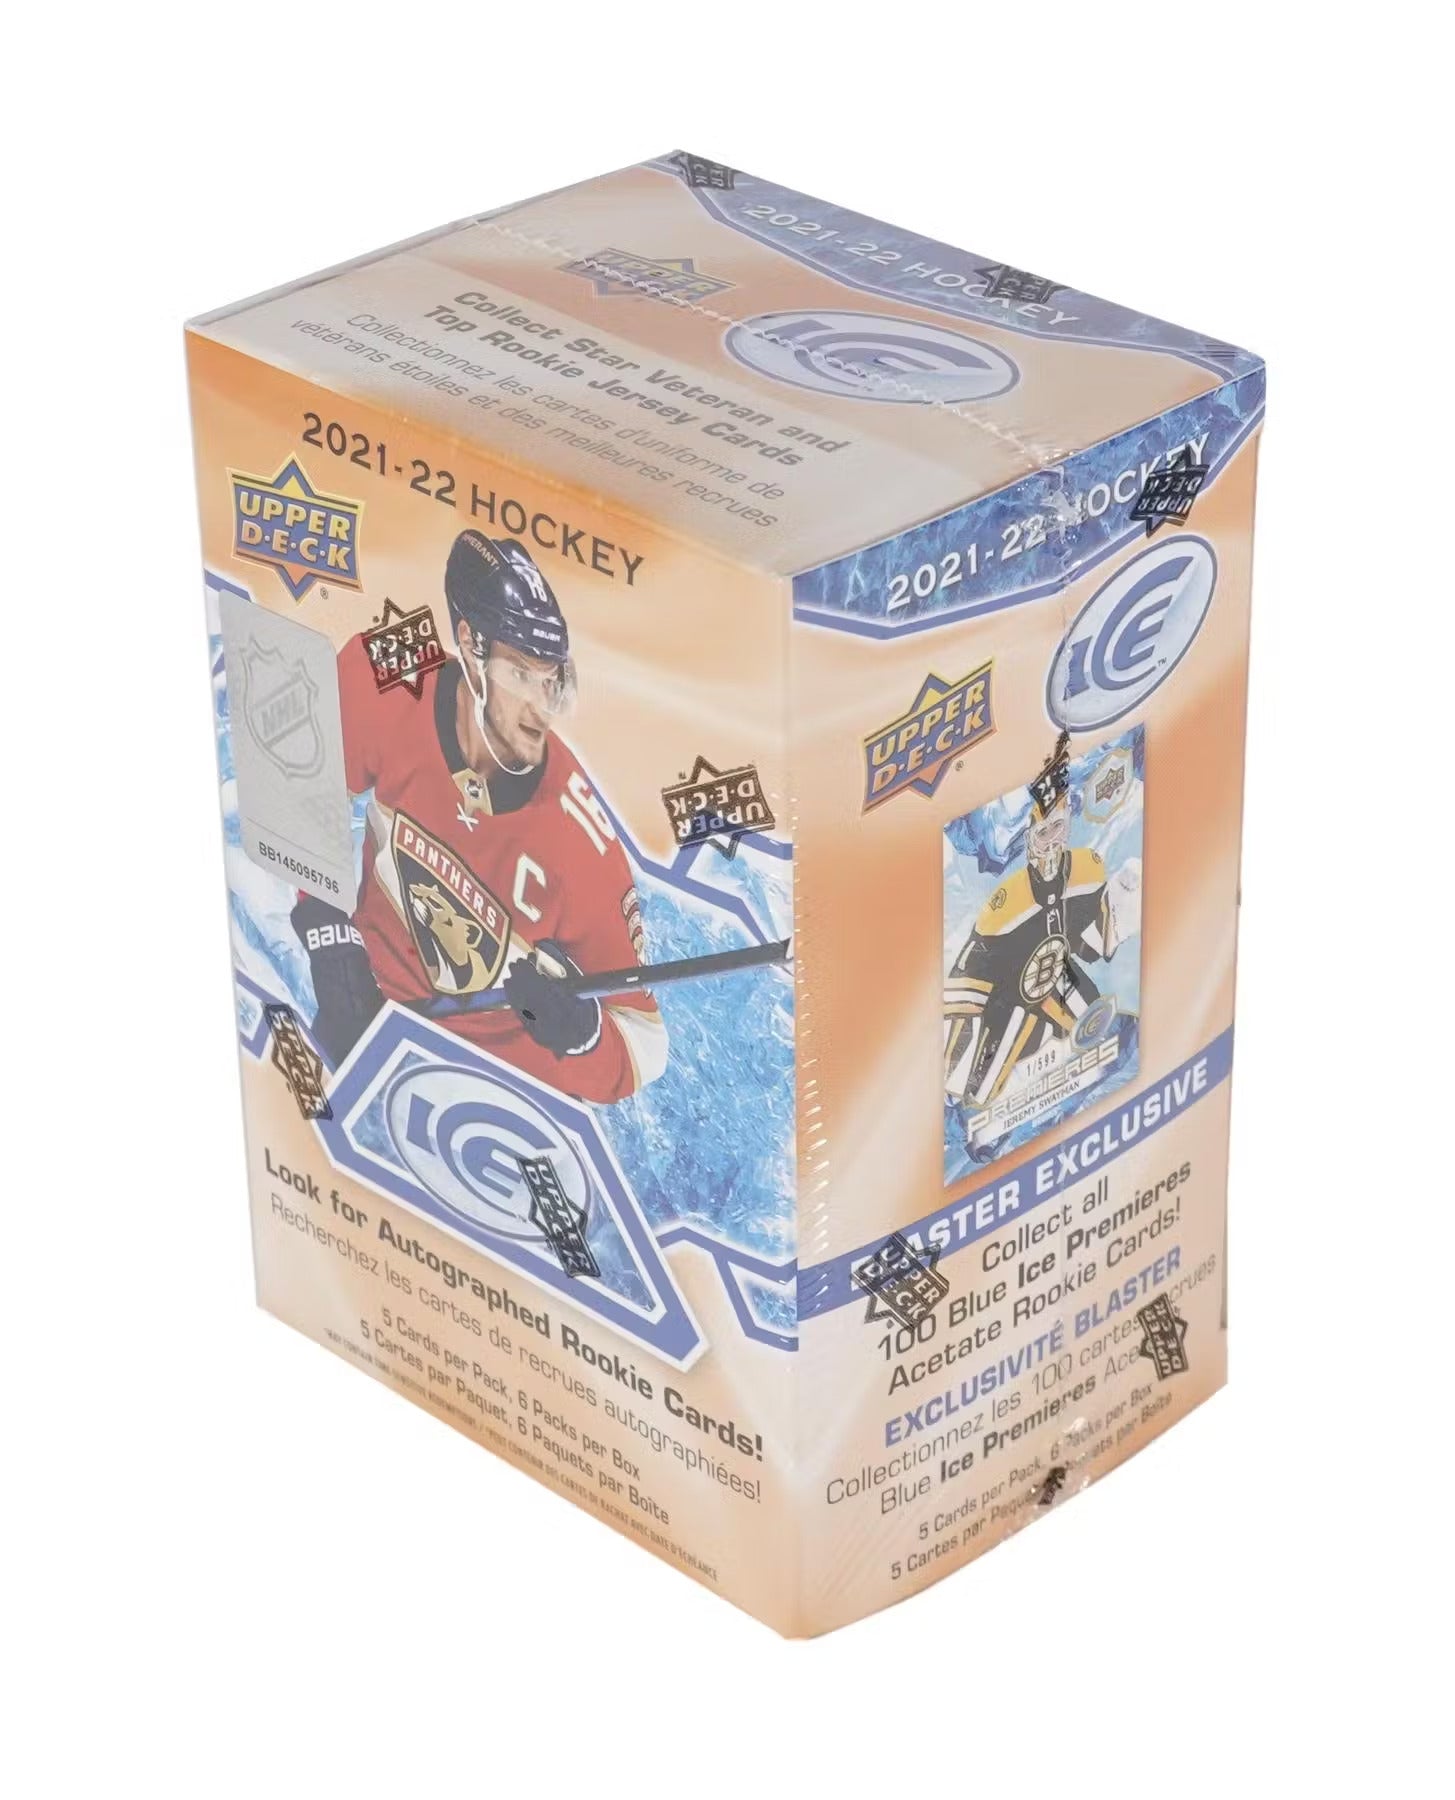 2021-22 Upper Deck Ice Hockey Blaster Box - Miraj Trading